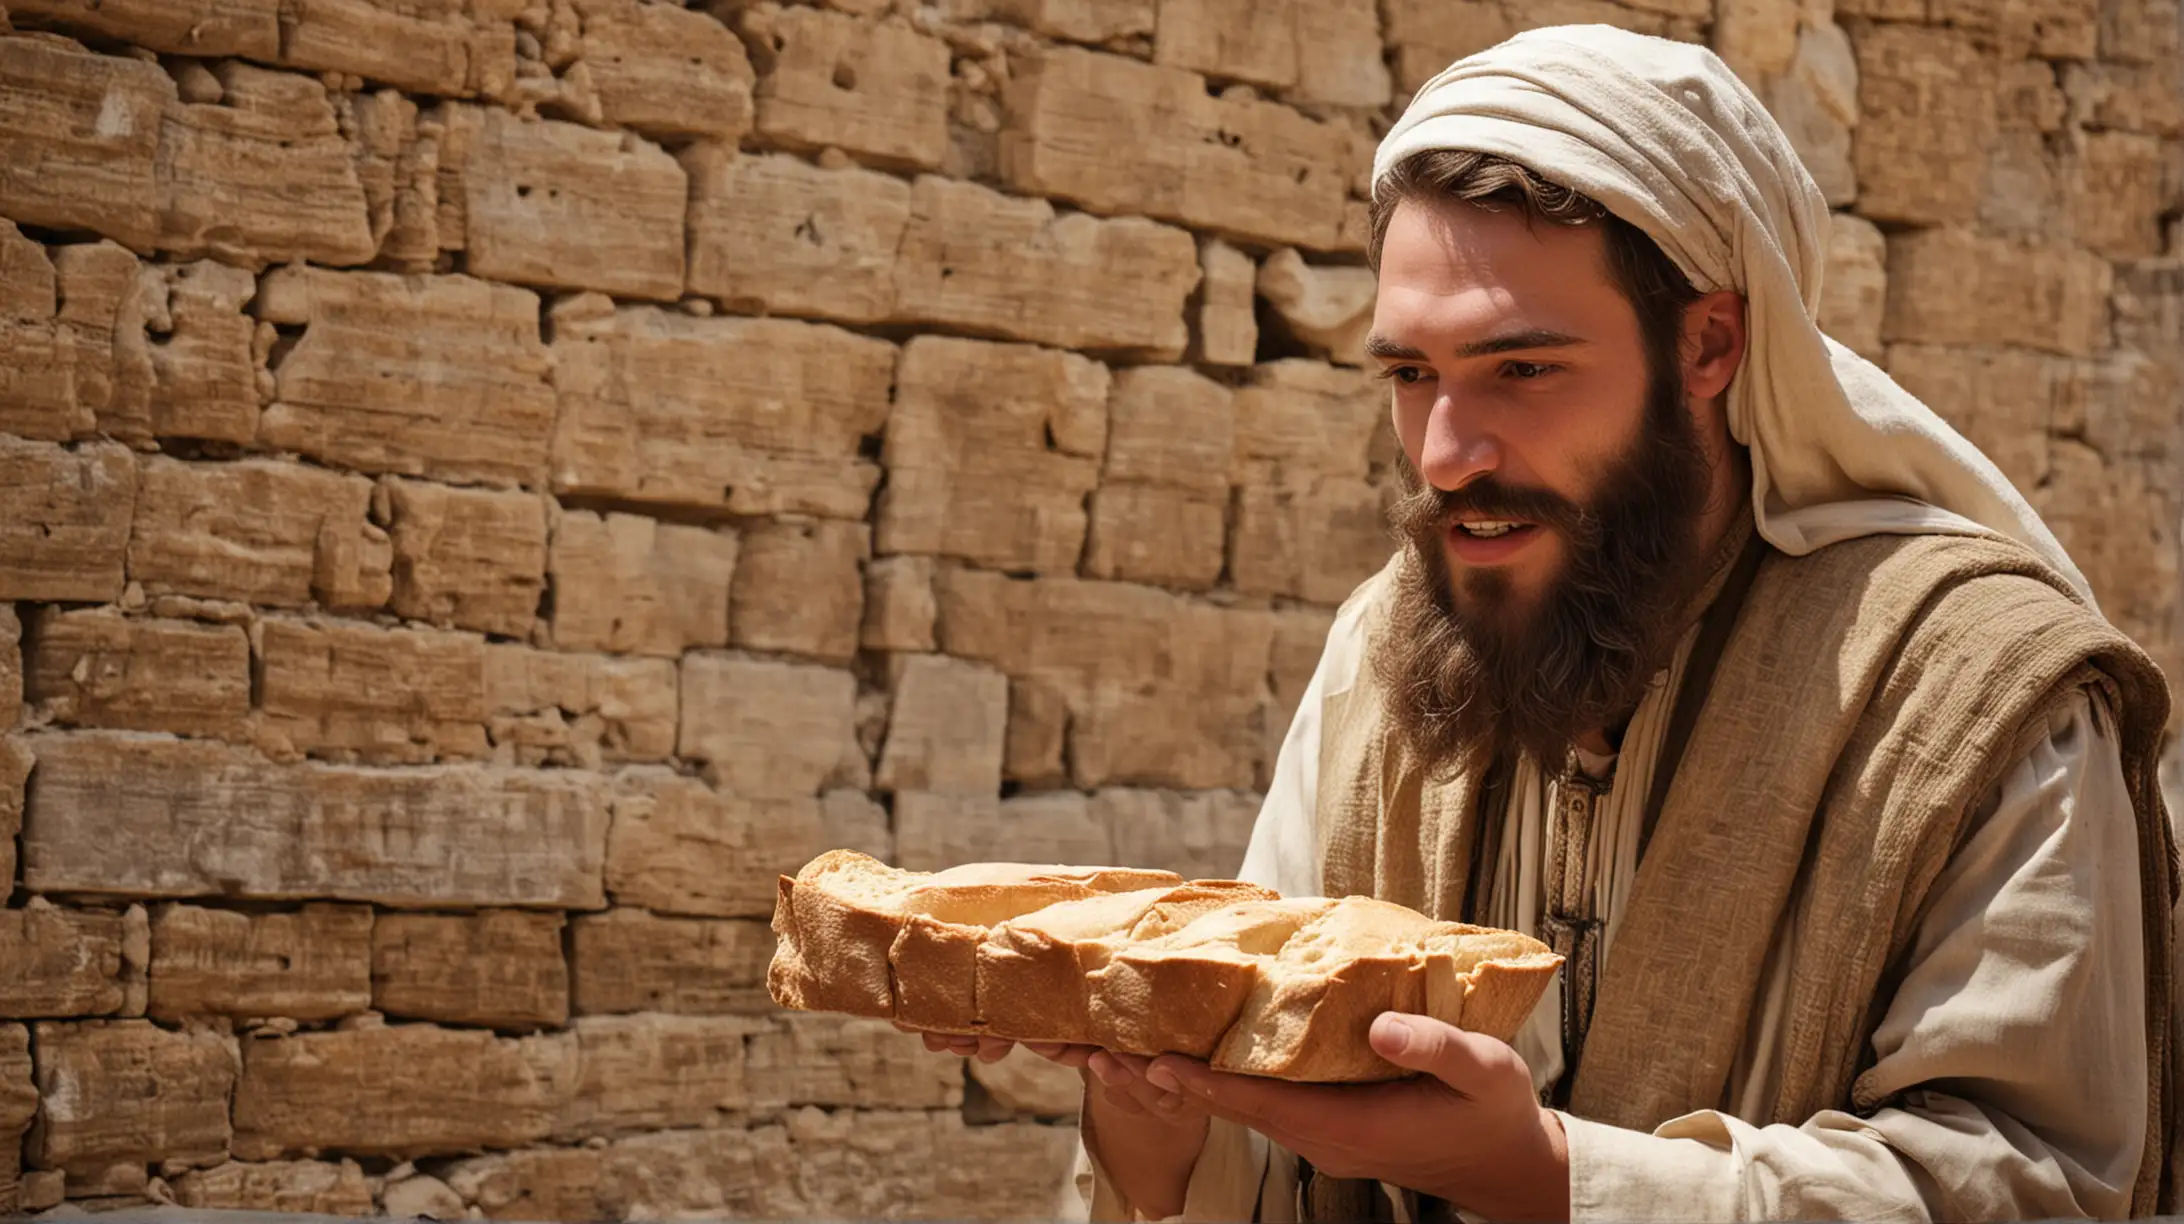 Biblical Scene Young Man Receives Bread from Elderly Priest in Desert Castle